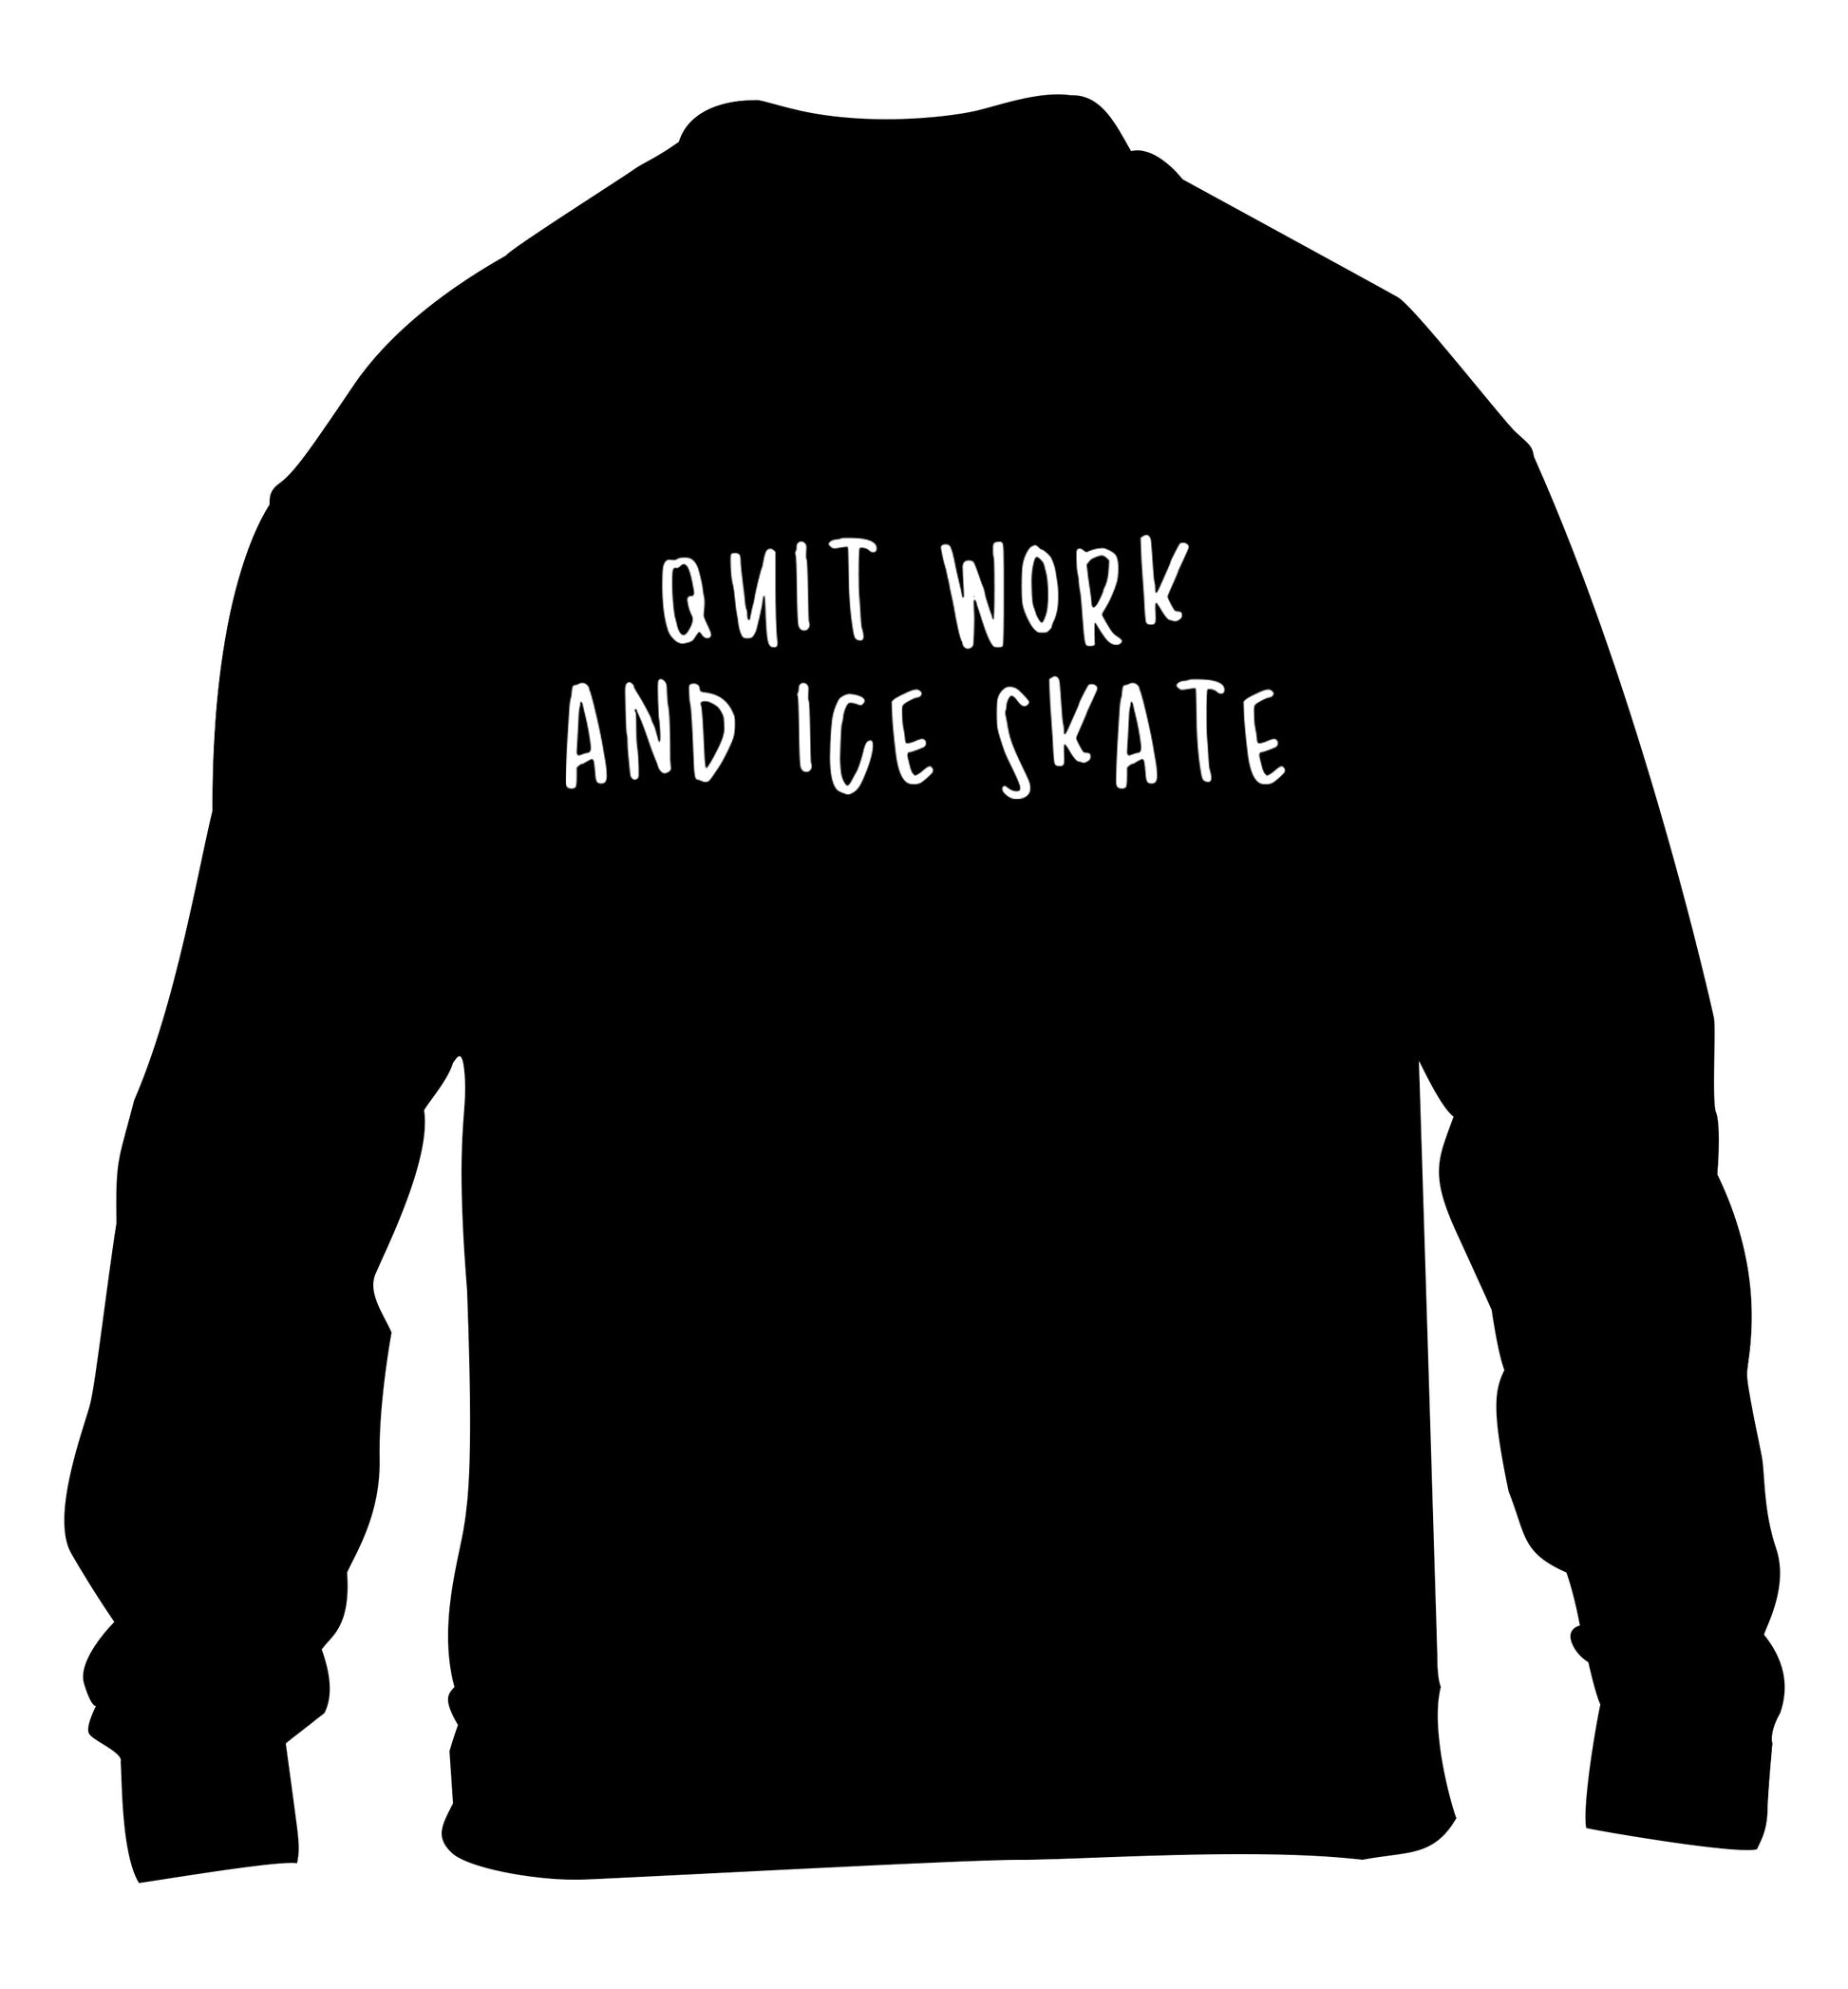 Quit work ice skate children's black sweater 12-14 Years